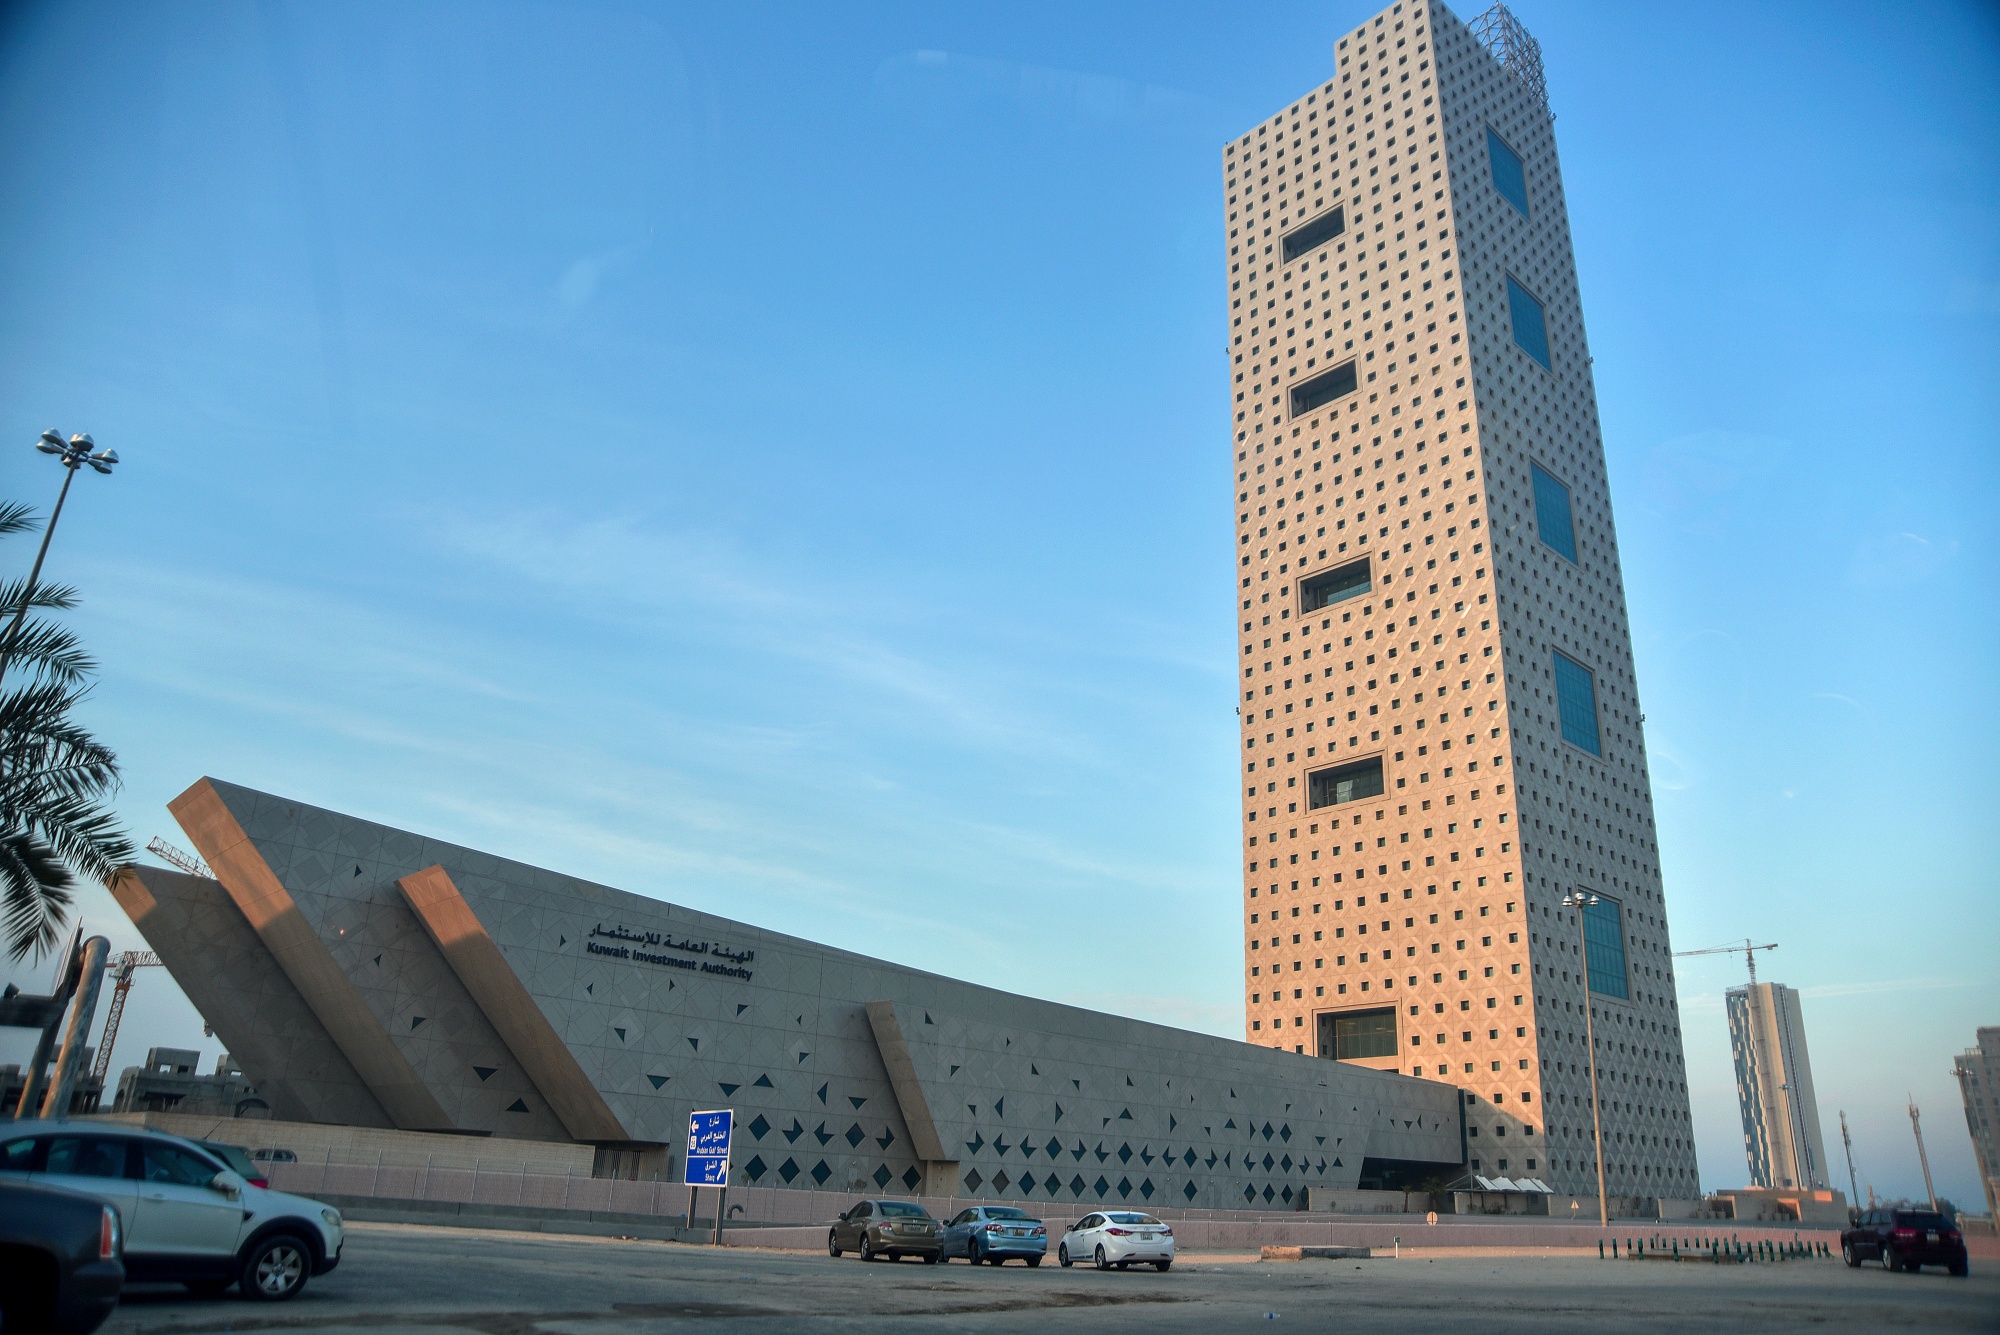 The Kuwait investment Authority headquarters in Kuwait City, Kuwait.